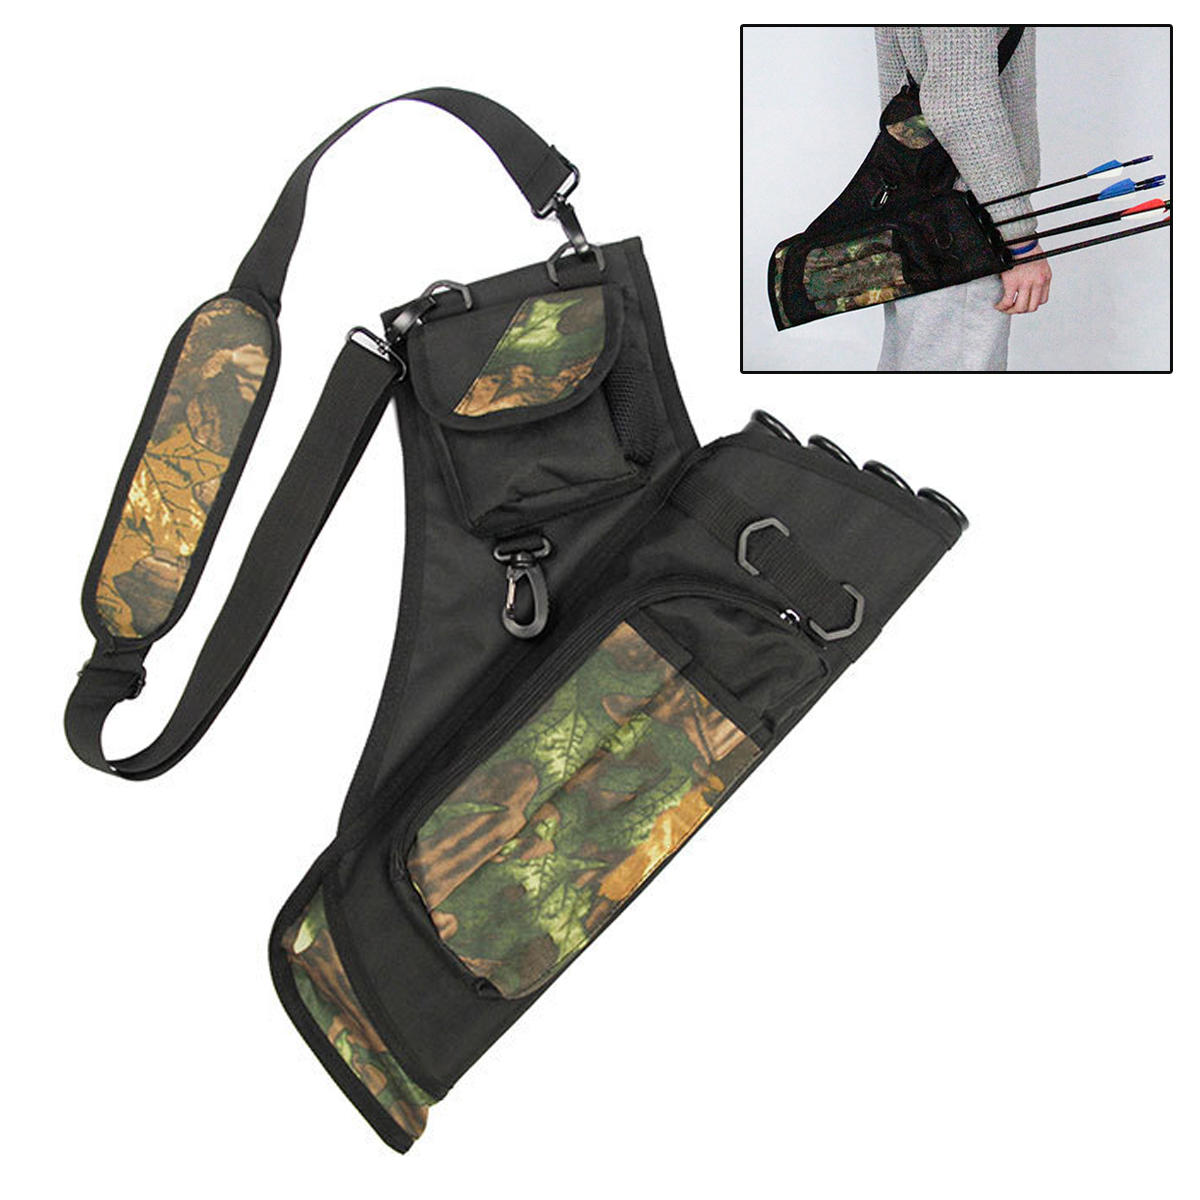 Verstellbarer Pfeilhalter 4 Tube Arrow Holder Oxford Archery Bow Quiver Taktische Schultertasche Crossbody Messenger Bag